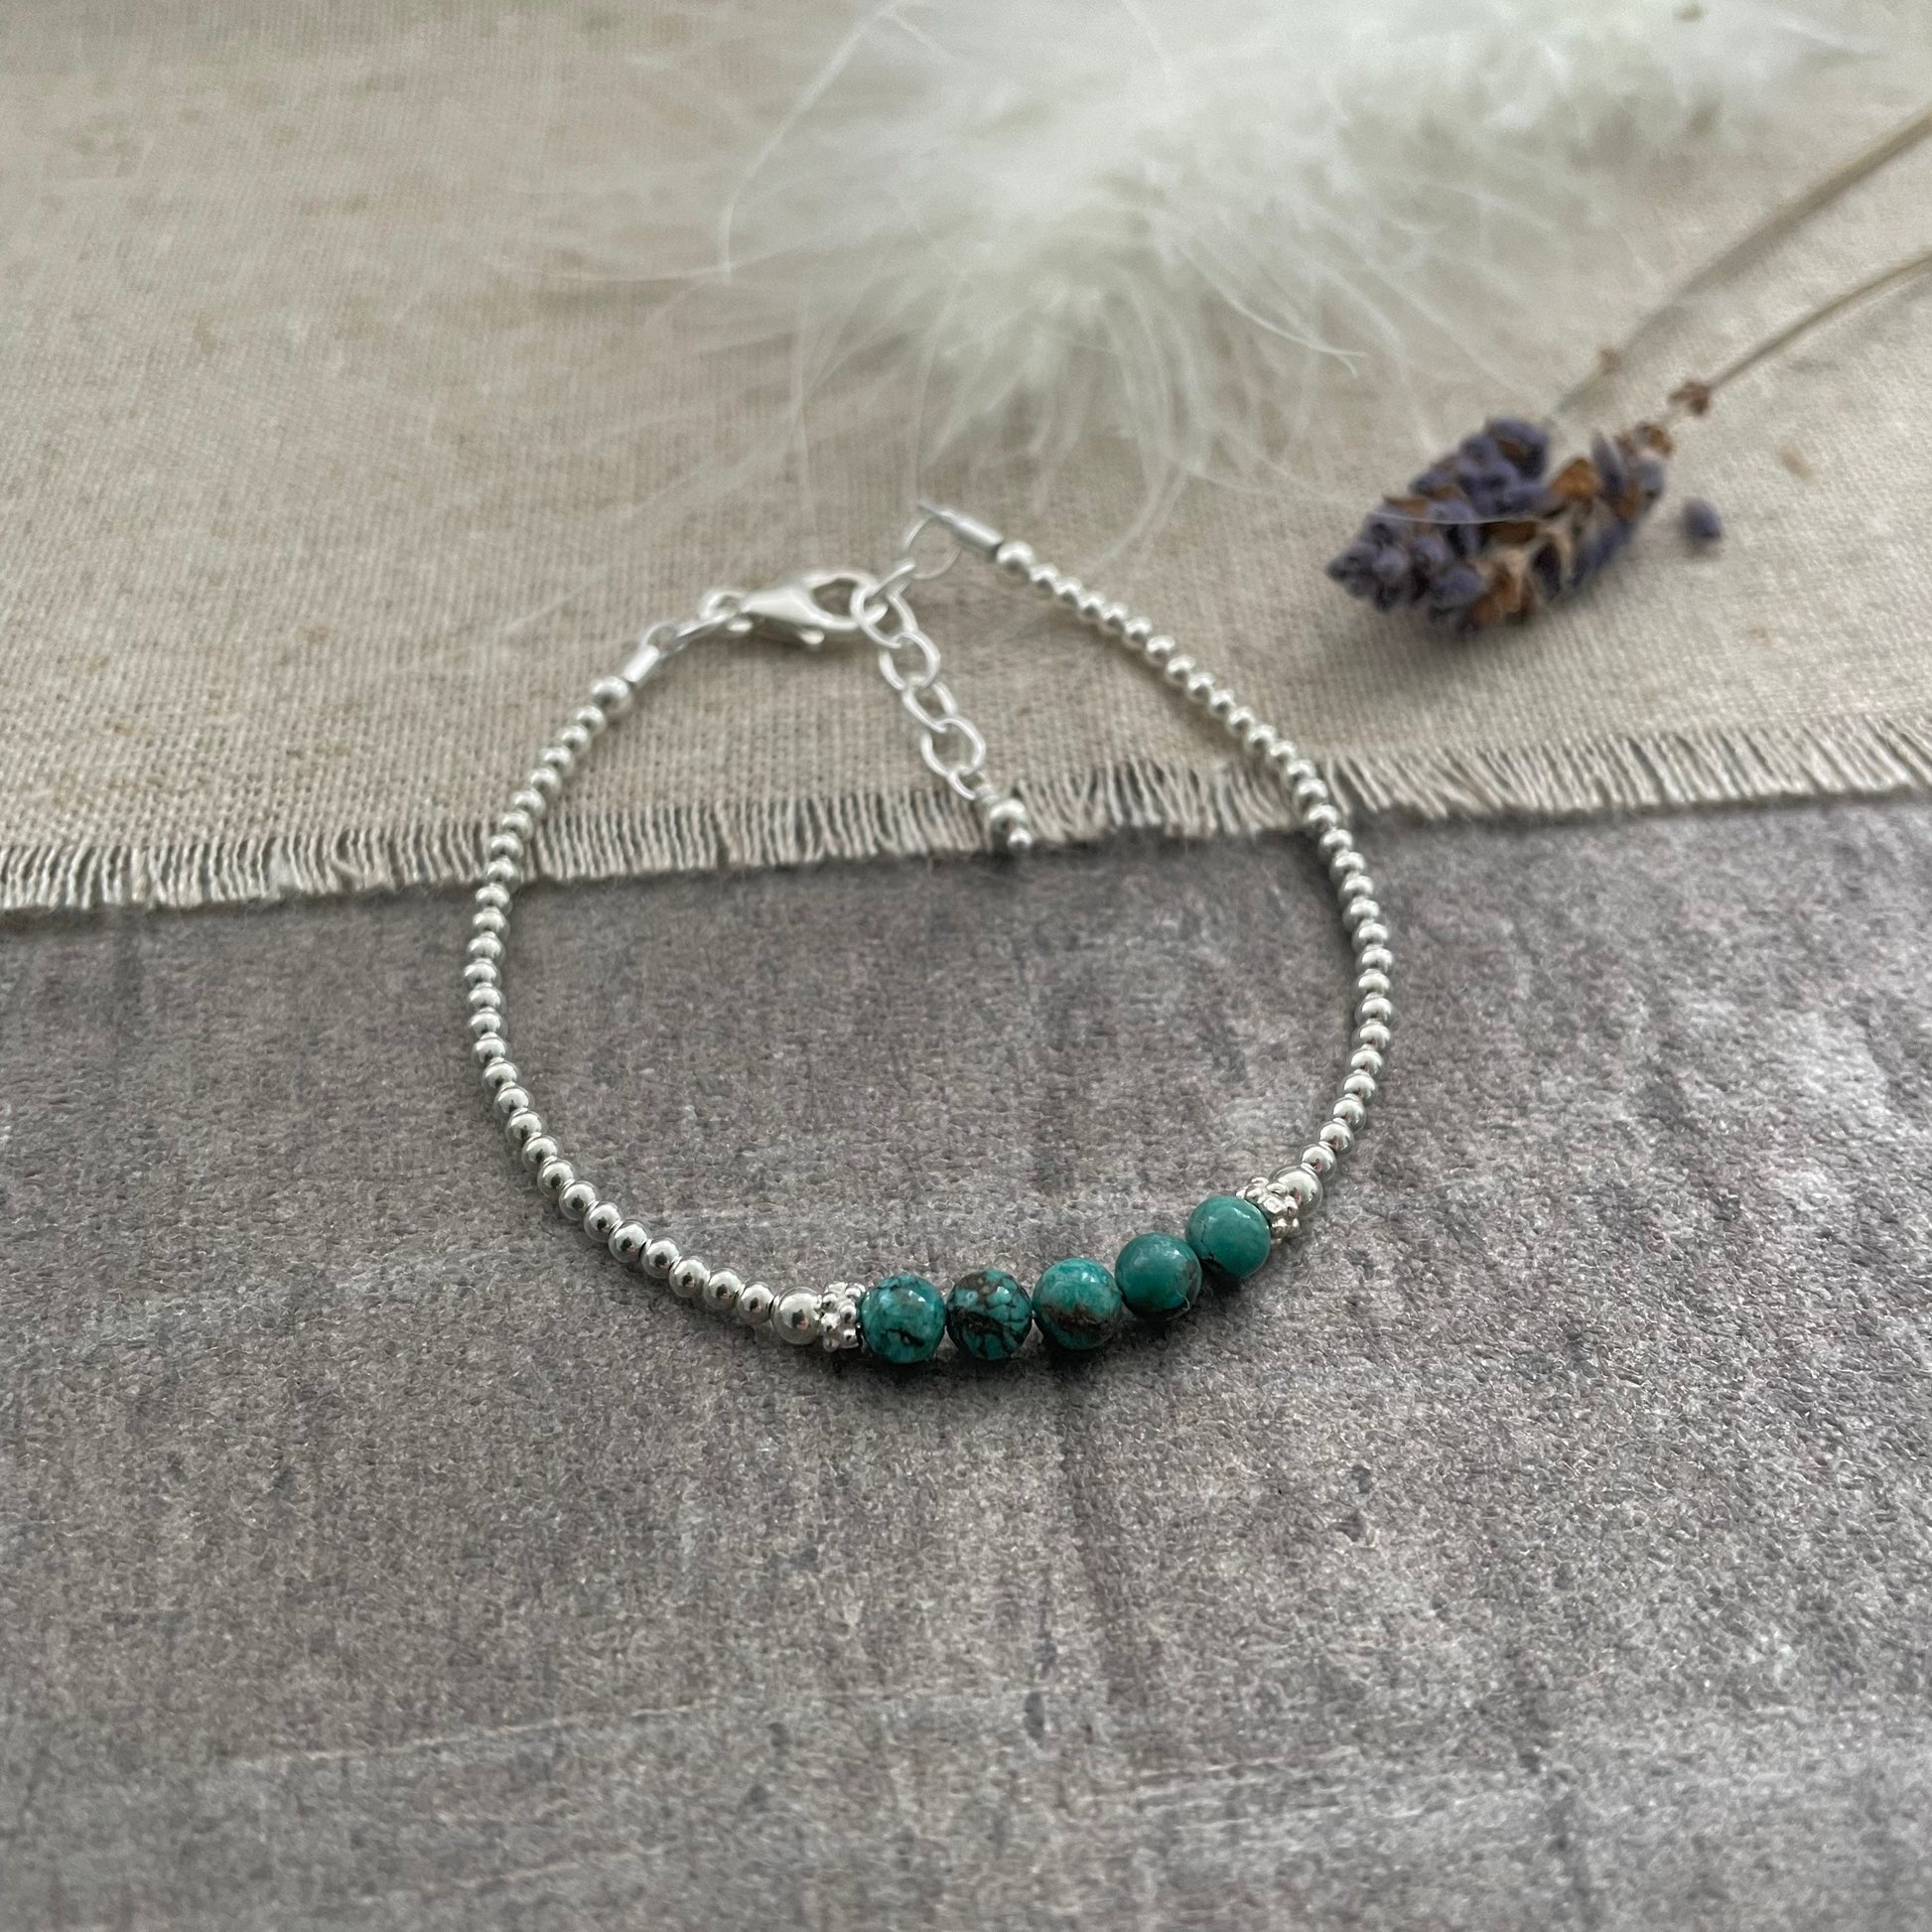 A Dainty Turquoise Bracelet, December Birthstone jewellery for December birthdays